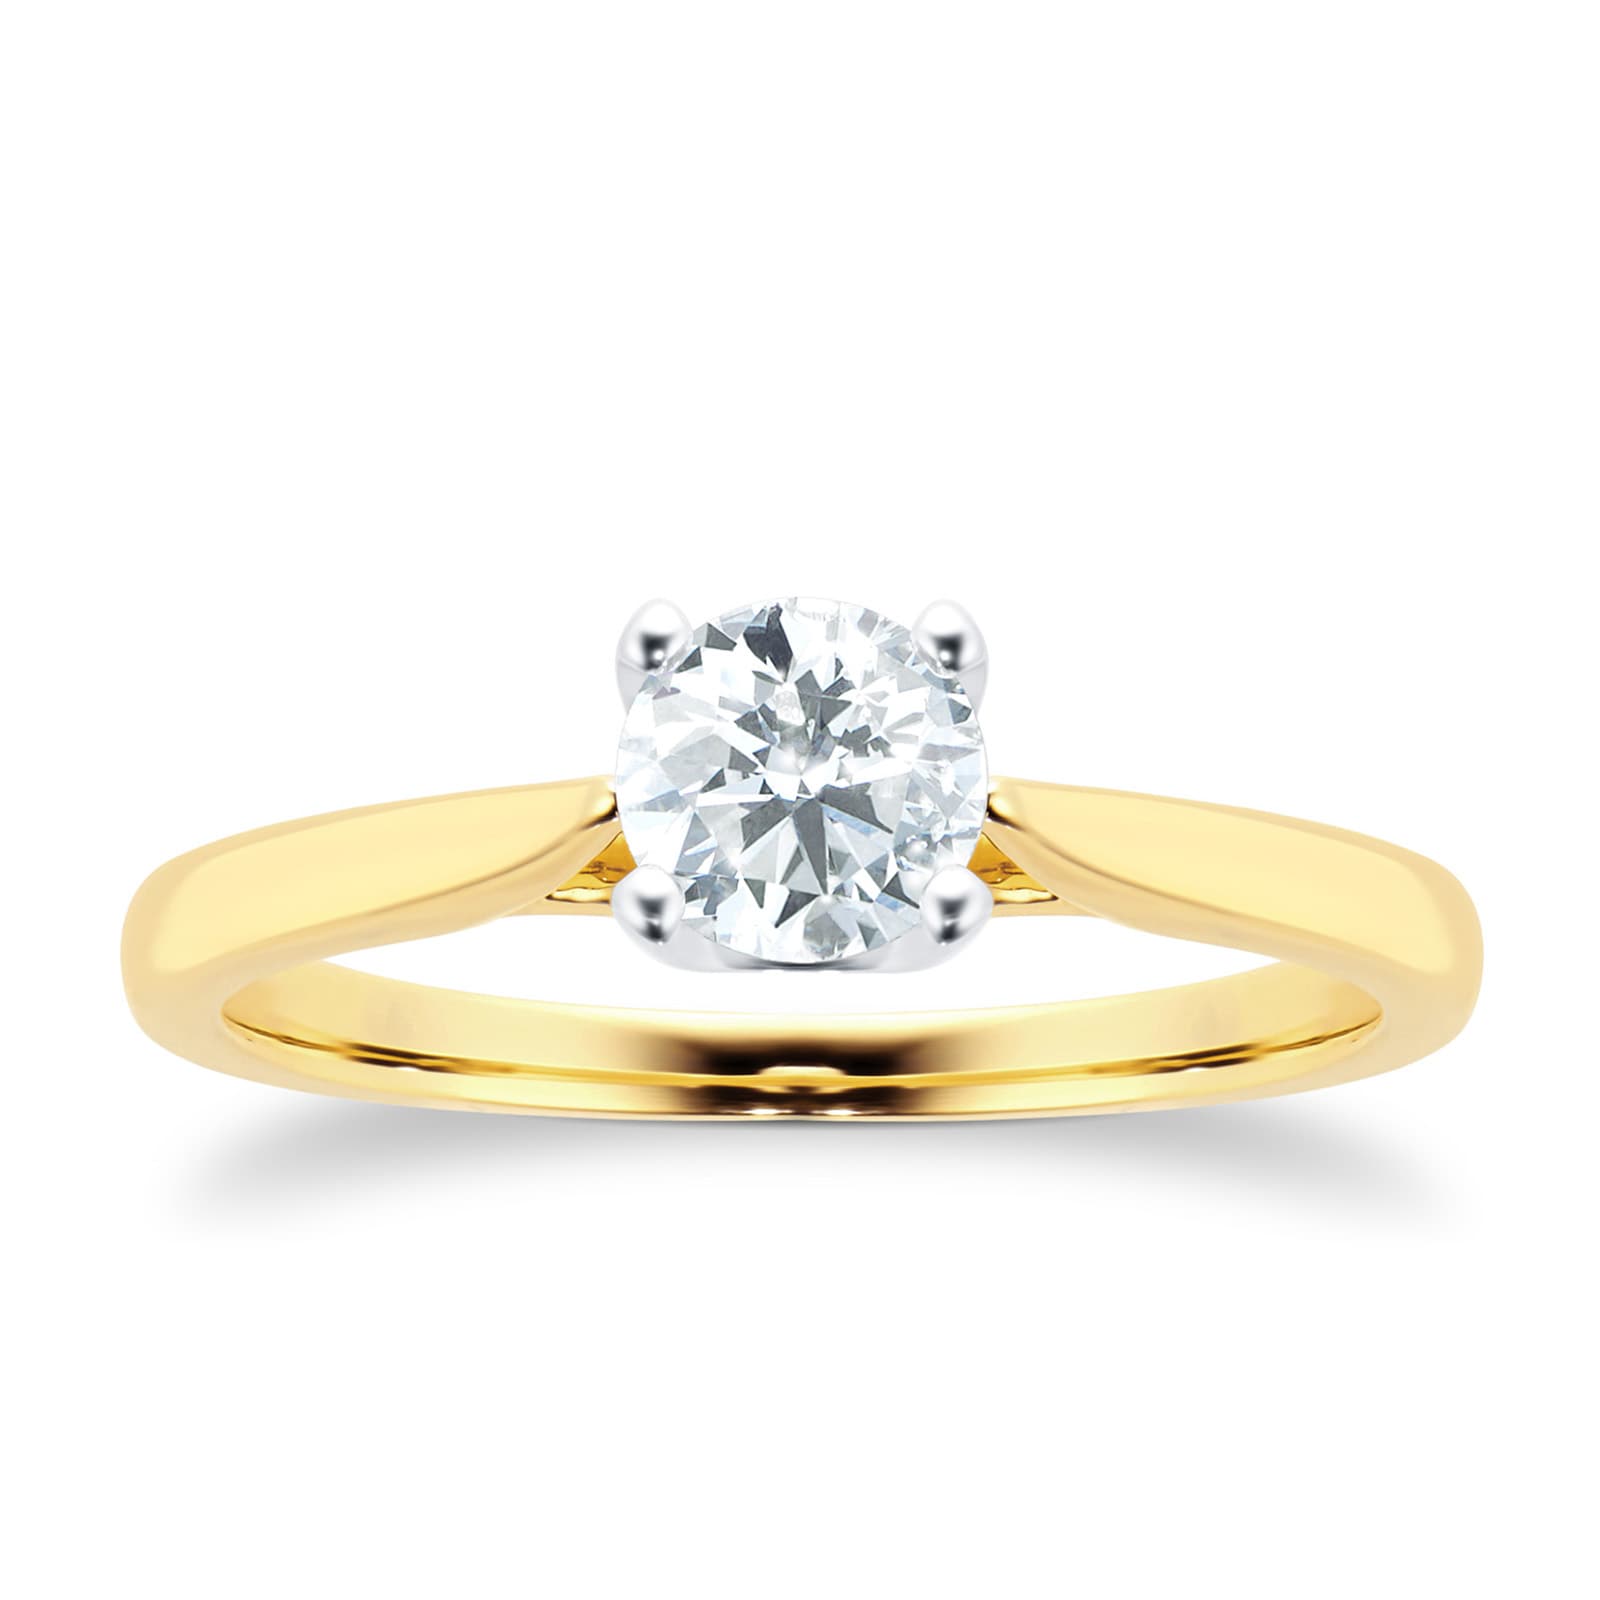 18ct Yellow Gold Brilliant Cut 0.50 Carat 88 Facet Diamond Ring - Ring Size M